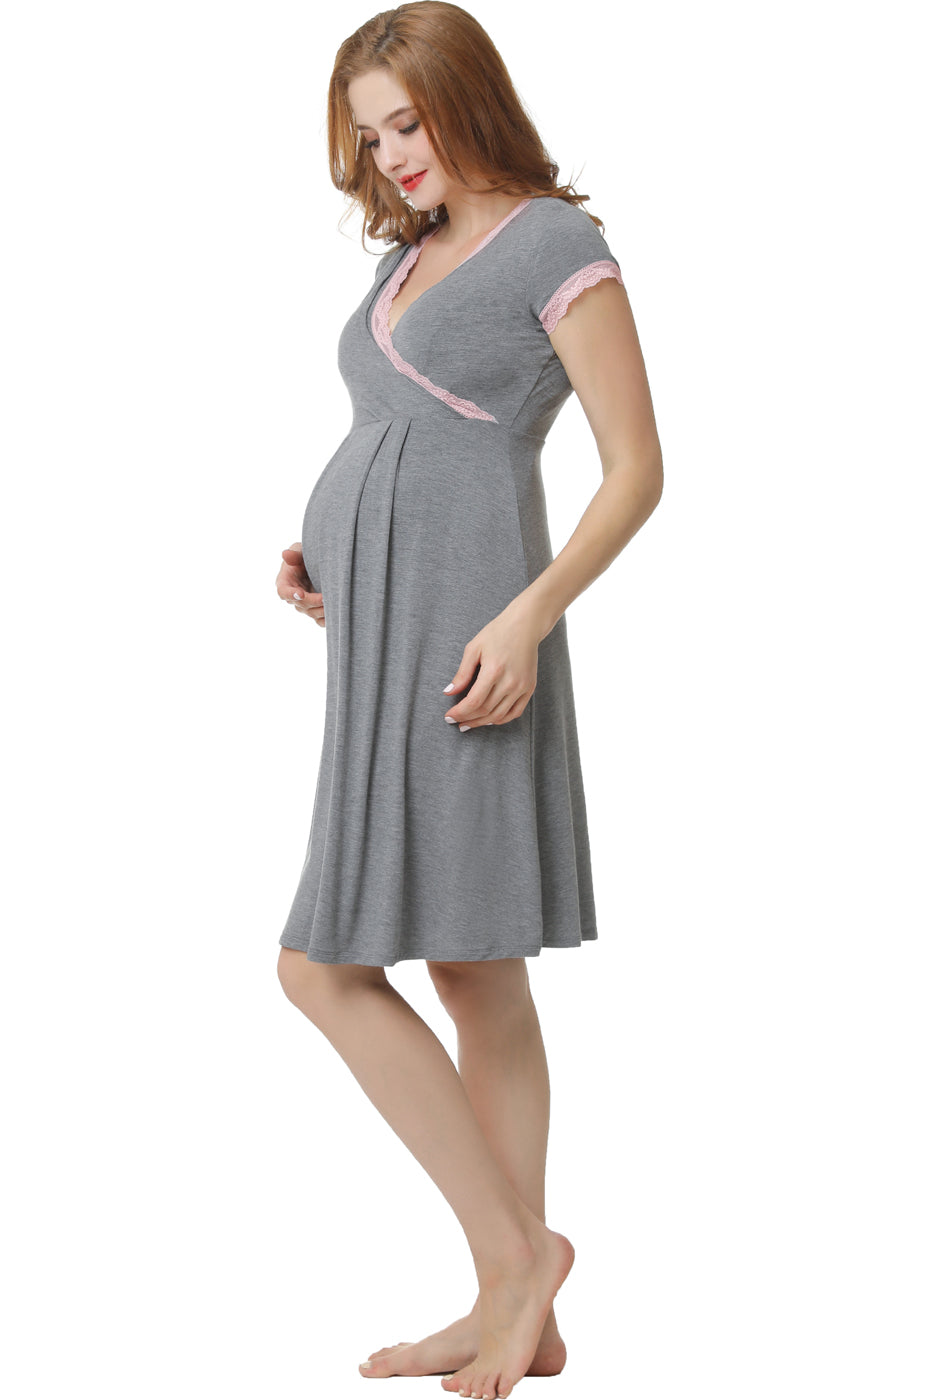 ToughMomma Raya Maternity Nursing Dress S - L